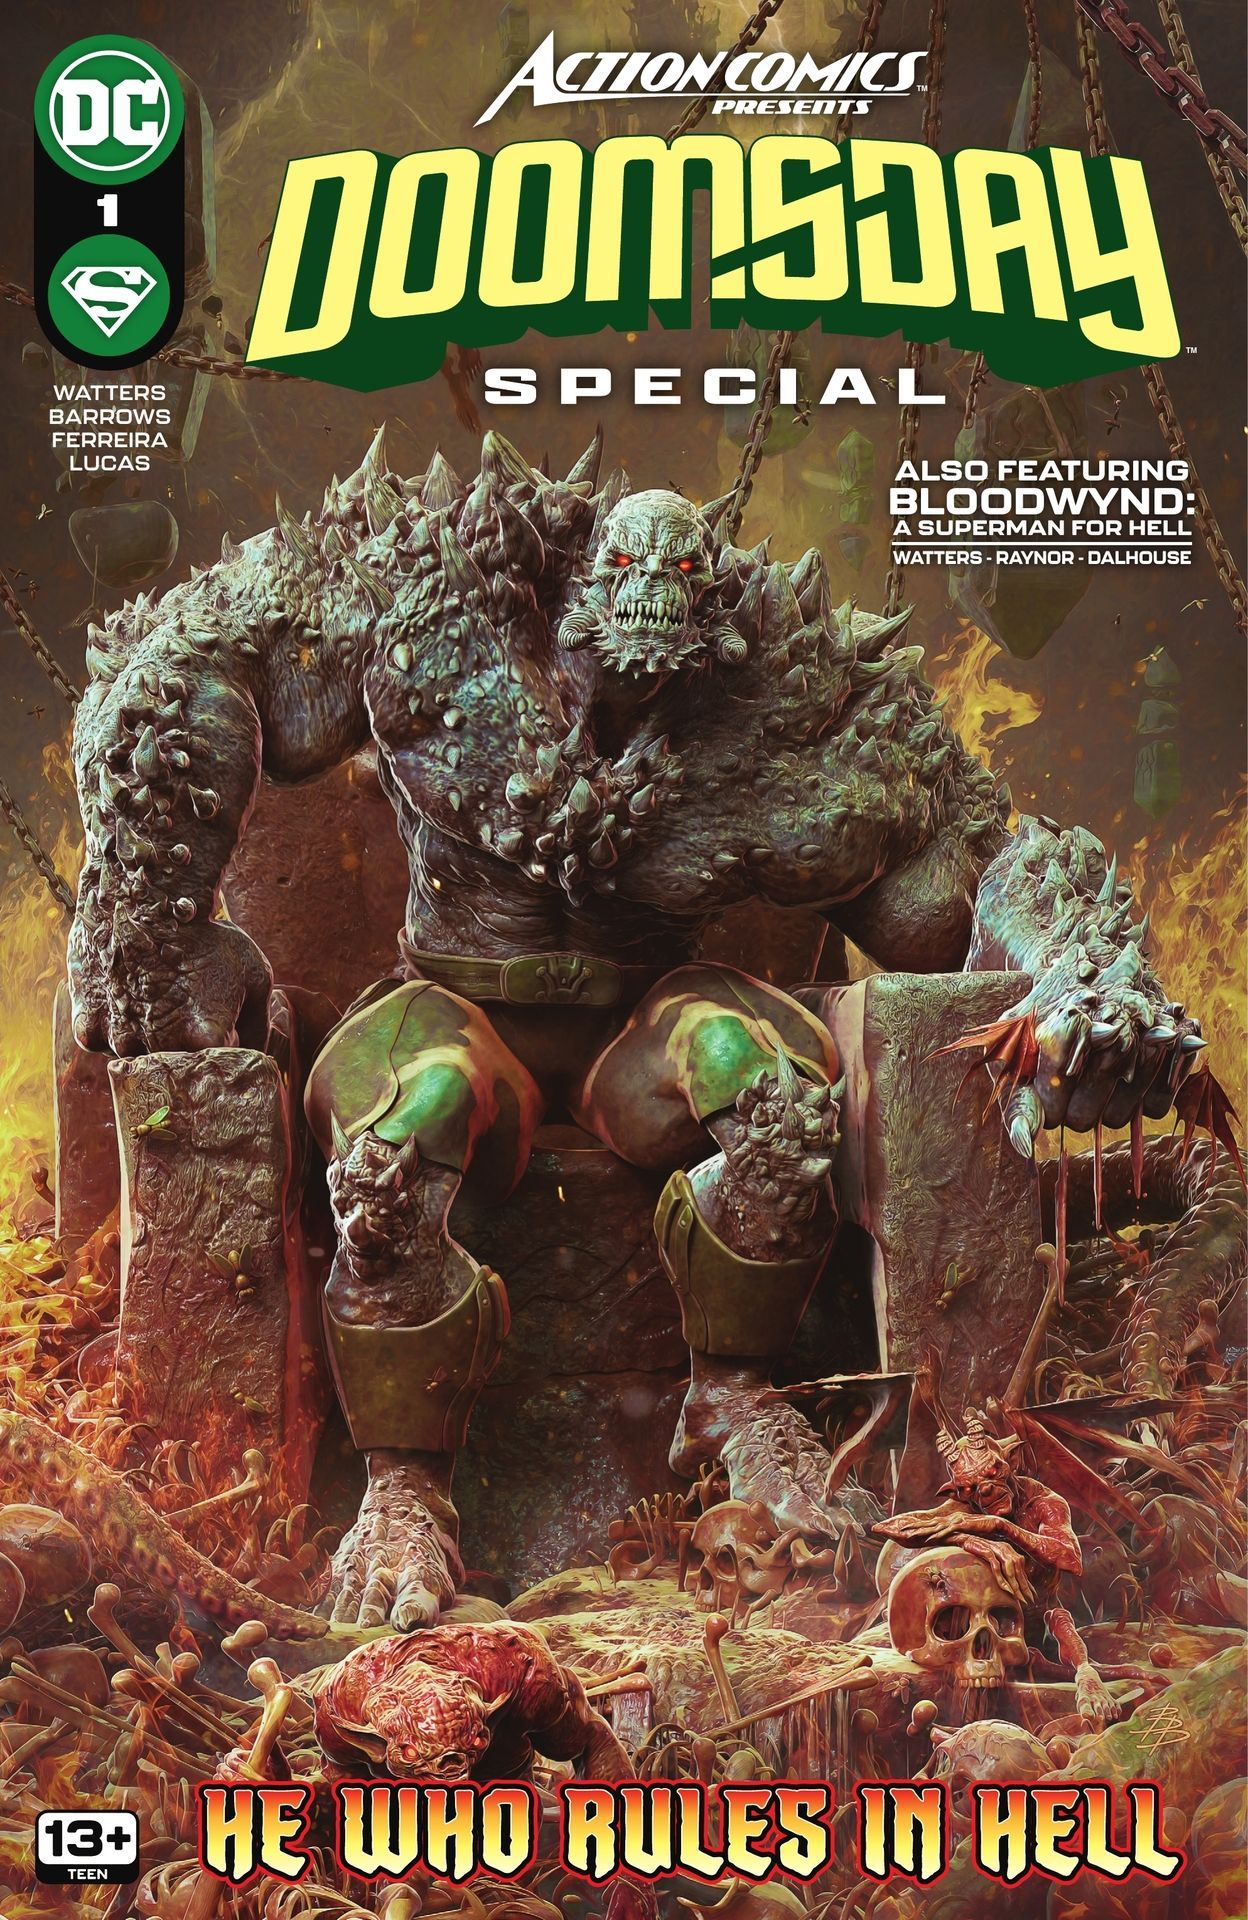 RESEÑA: DC's Action Comics Presents: Doomsday Special #1